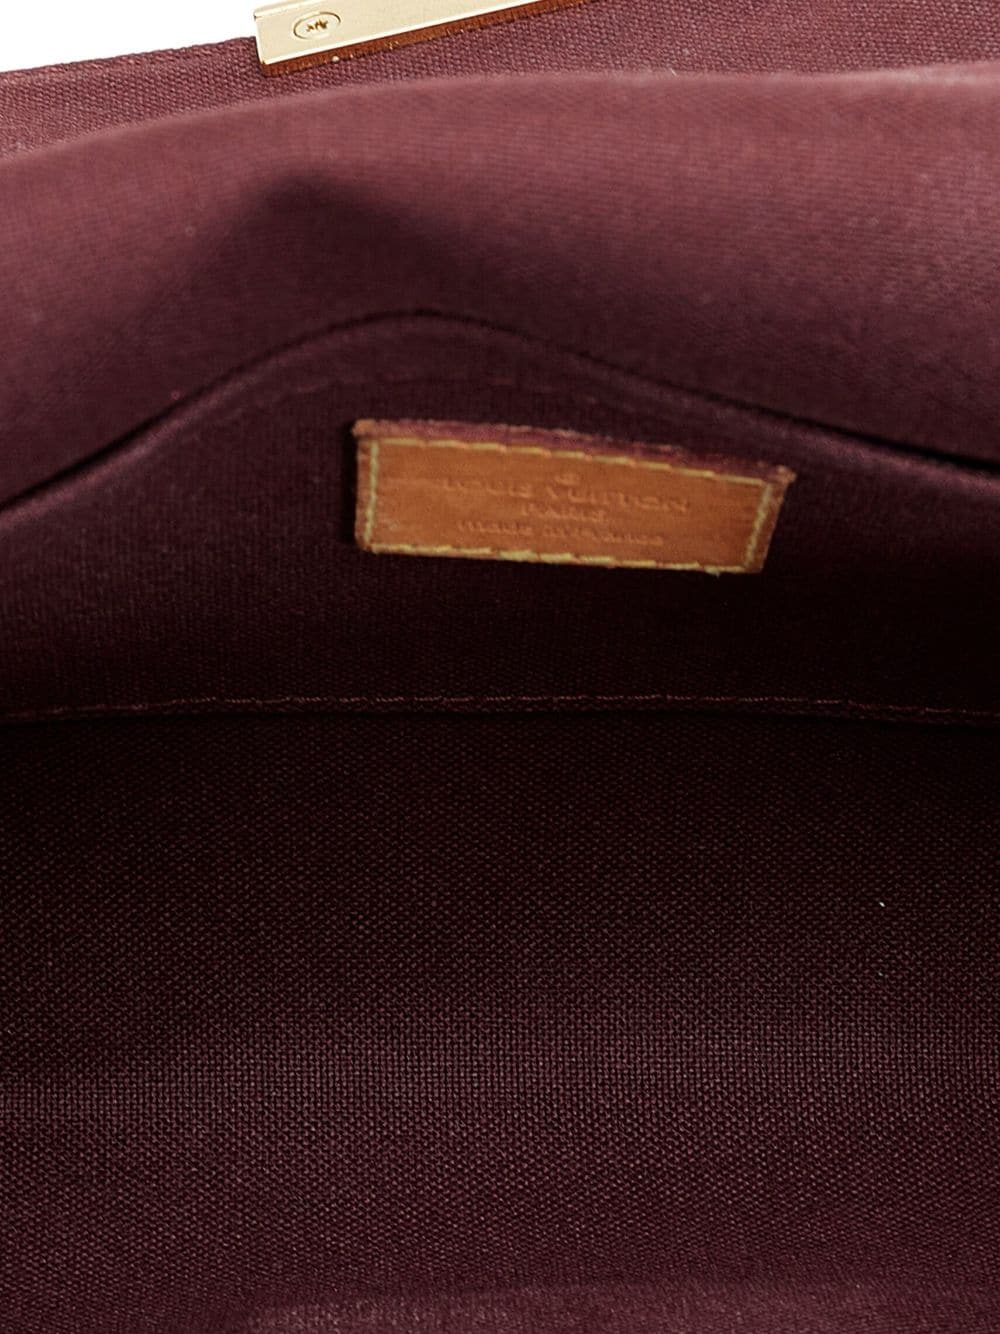 Louis Vuitton Monogram Favorite MM 2way Crossbody Flap Bag Leather